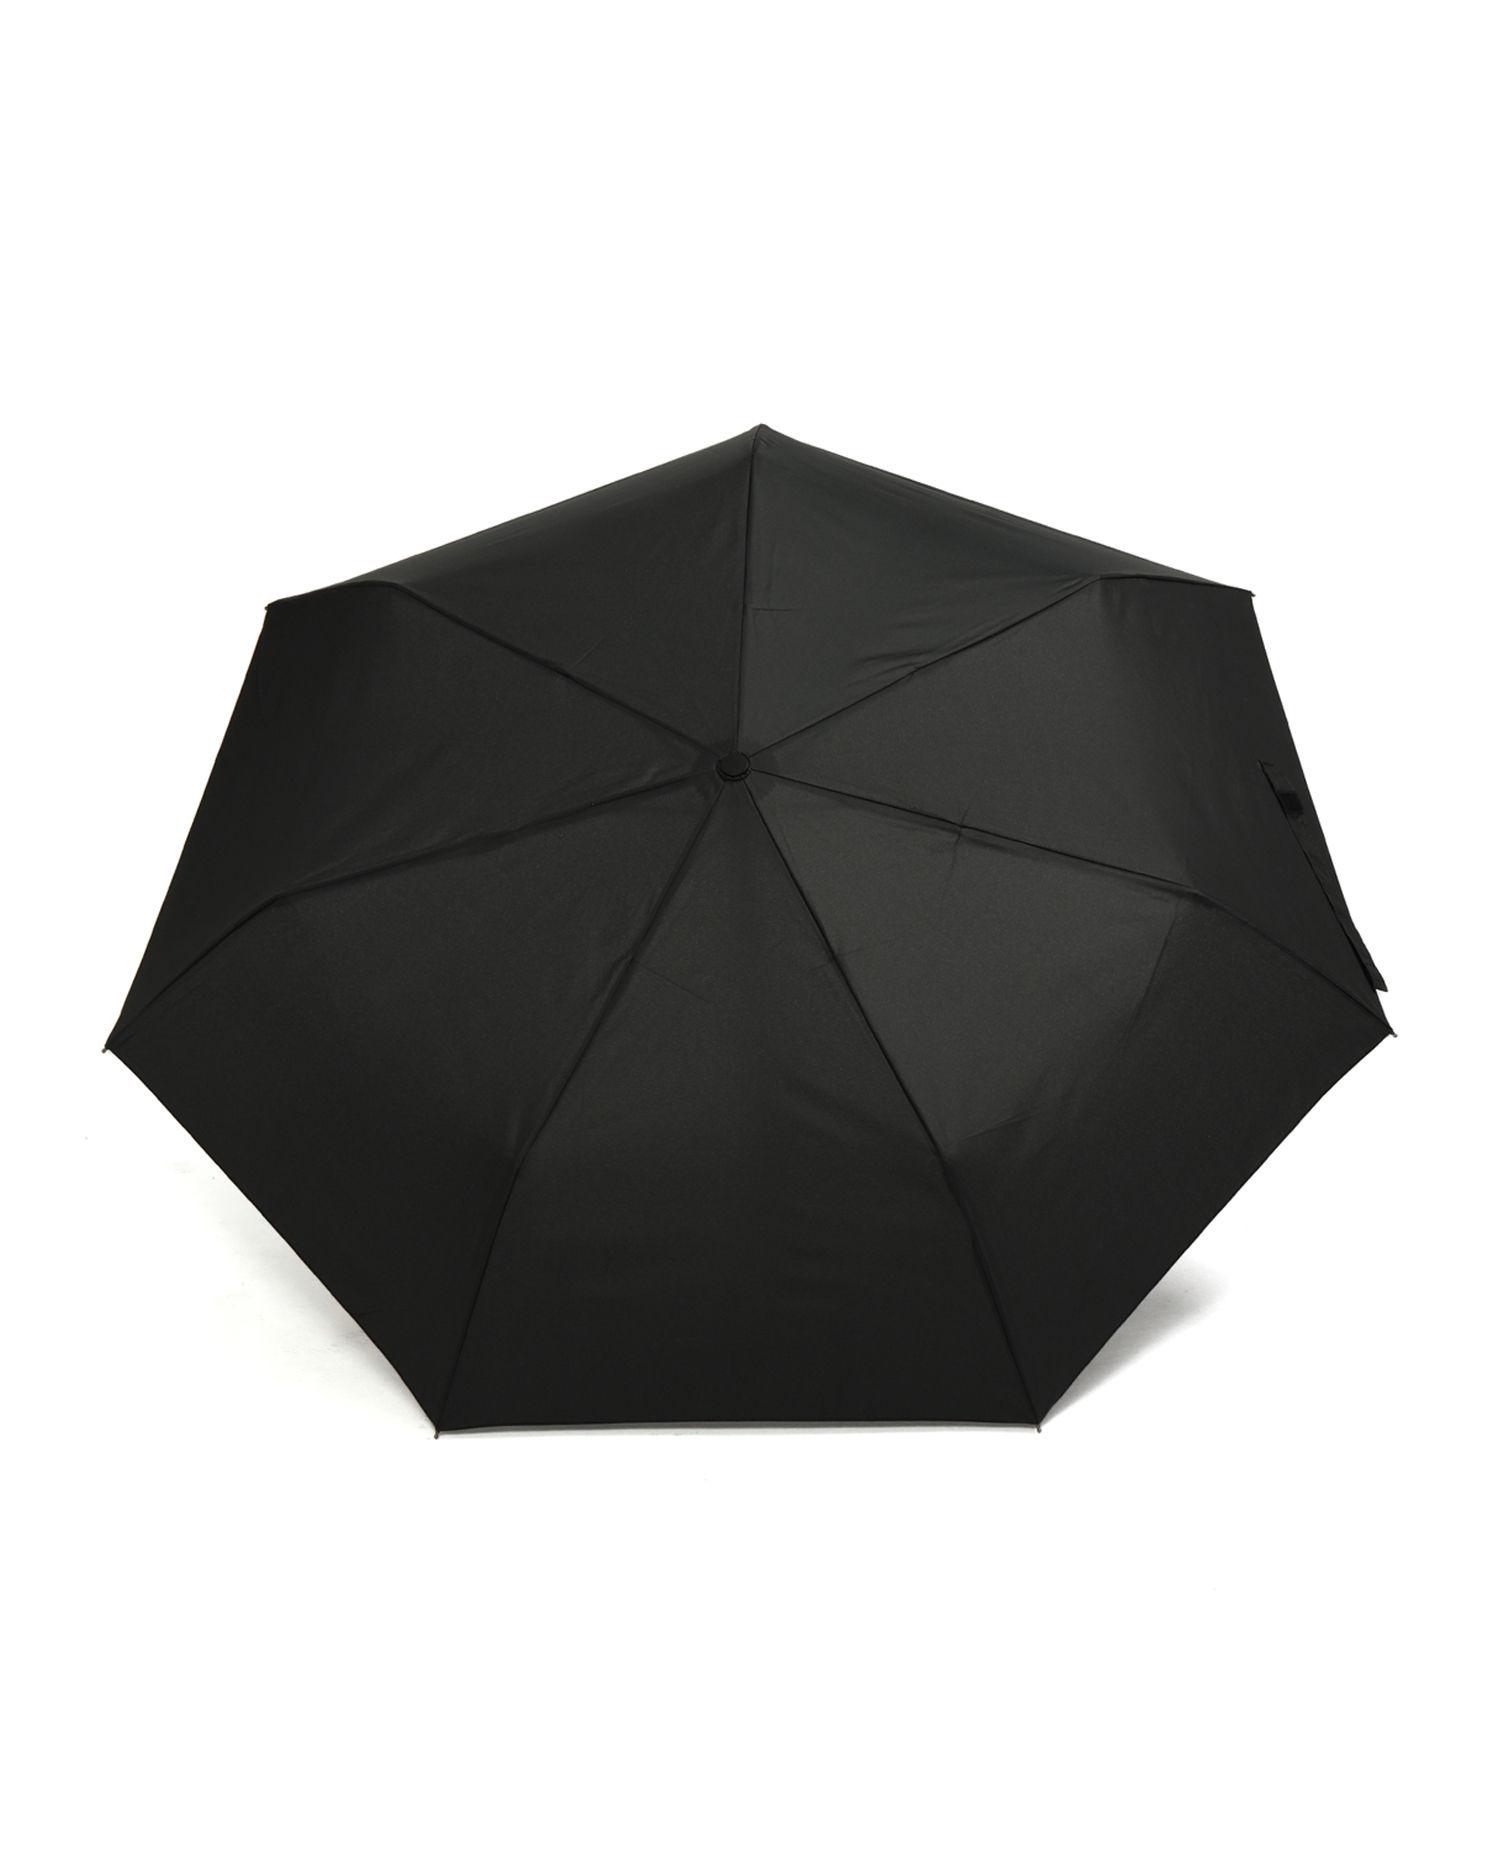 Classic umbrella by BPR